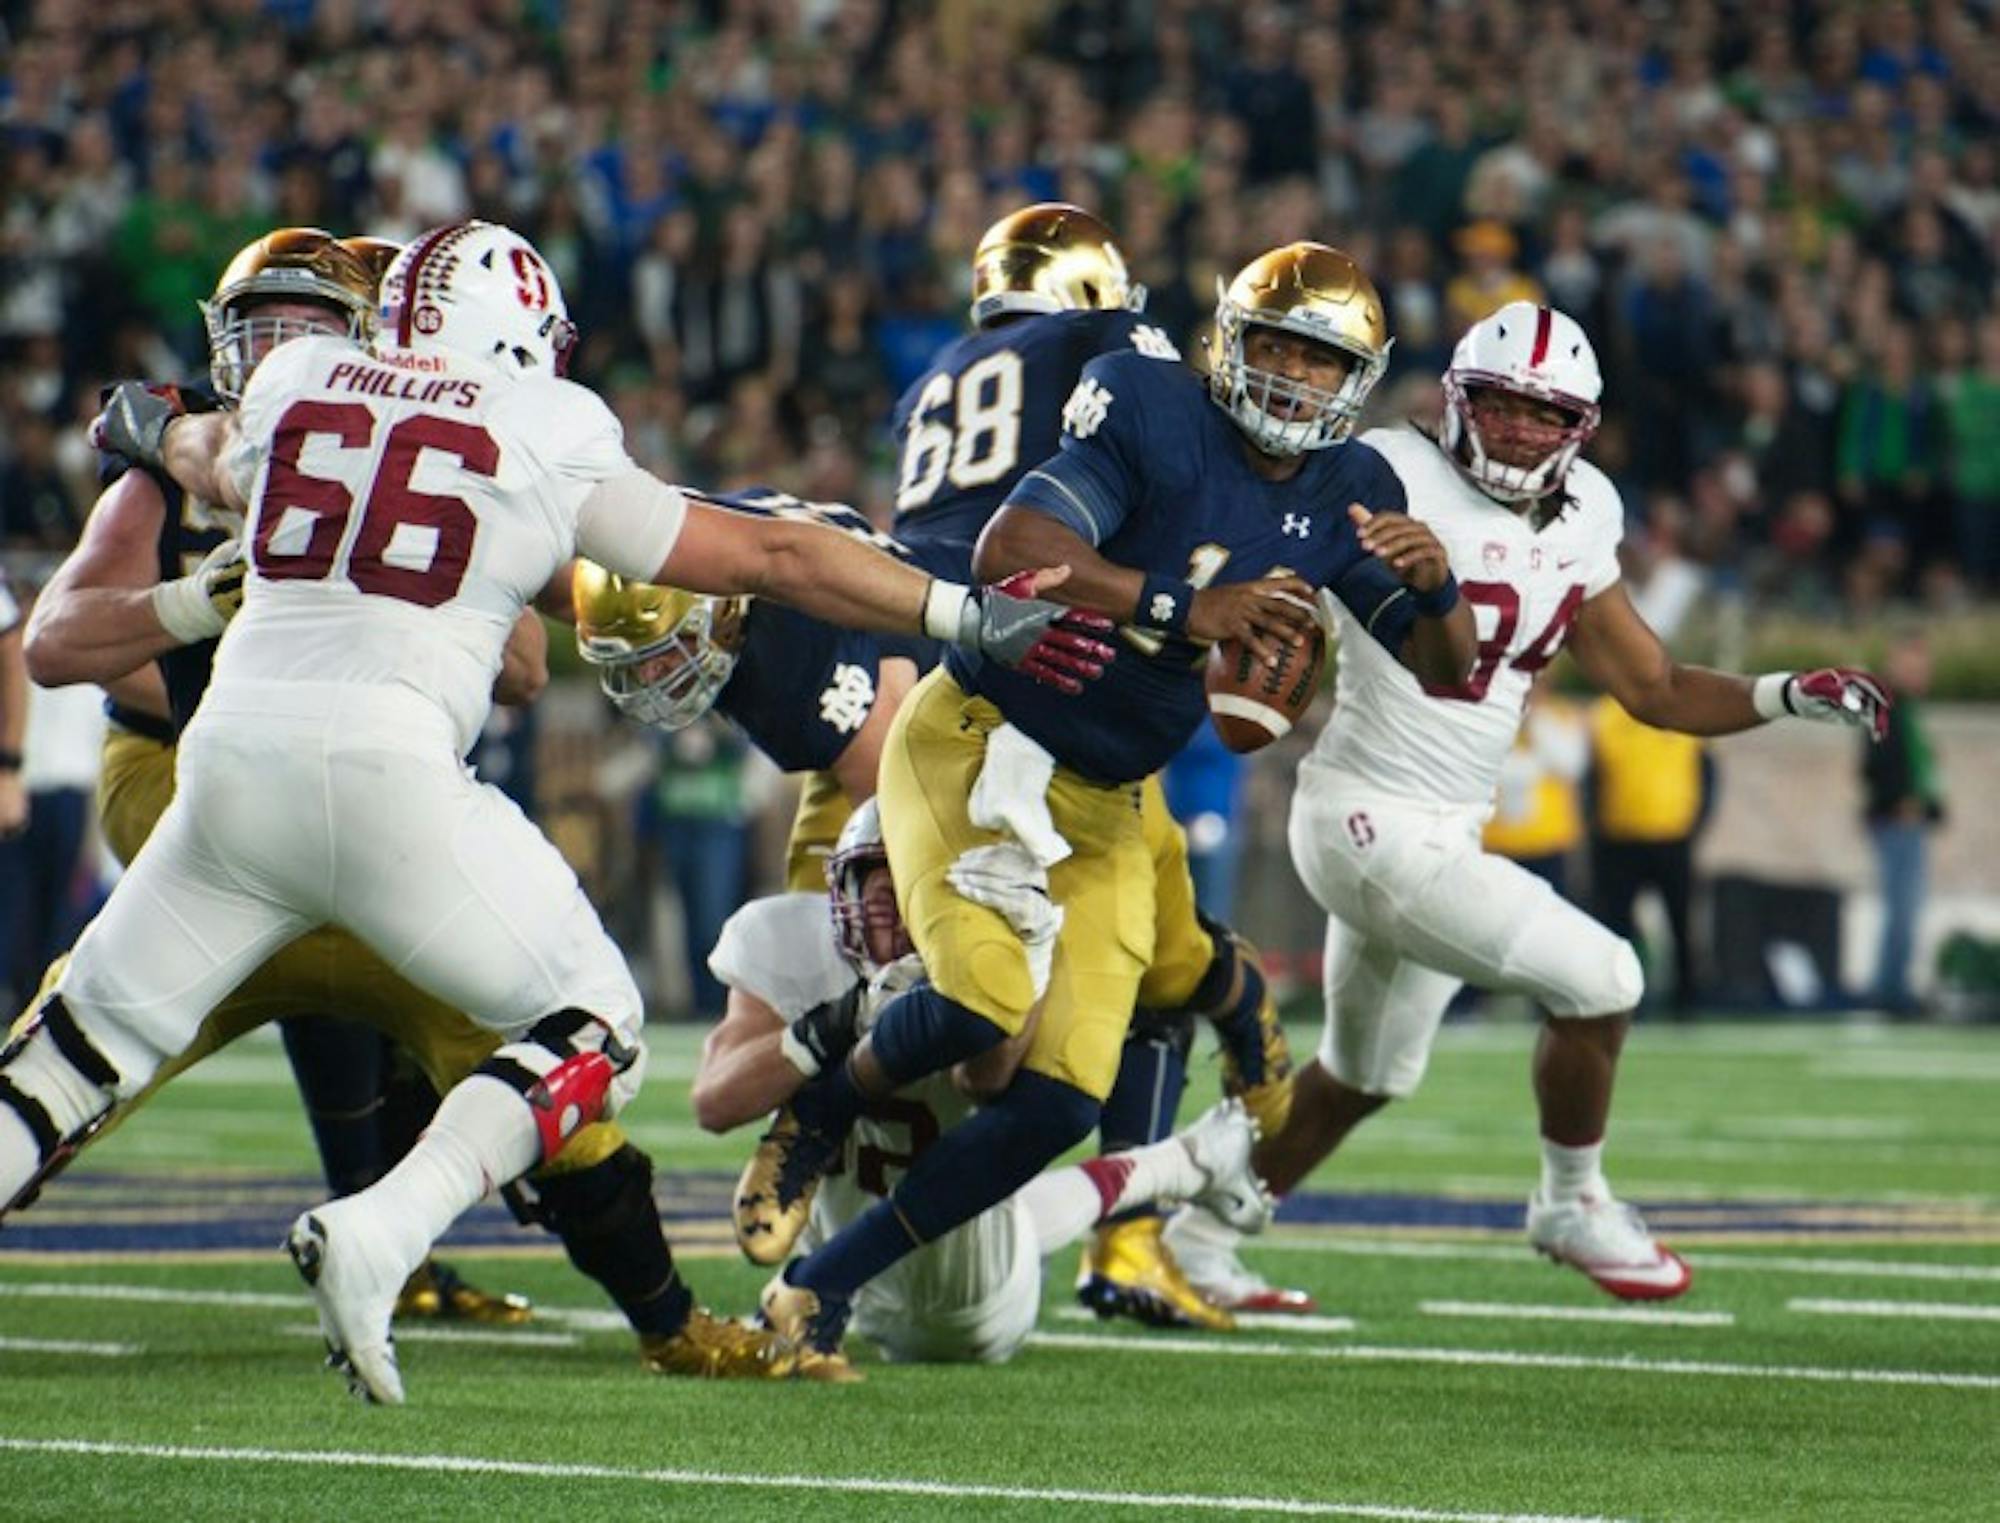 Irish junior quarterback DeShone Kizer scrambles away from a defender in Notre Dame's 17-10 loss to Stanford on Saturday.